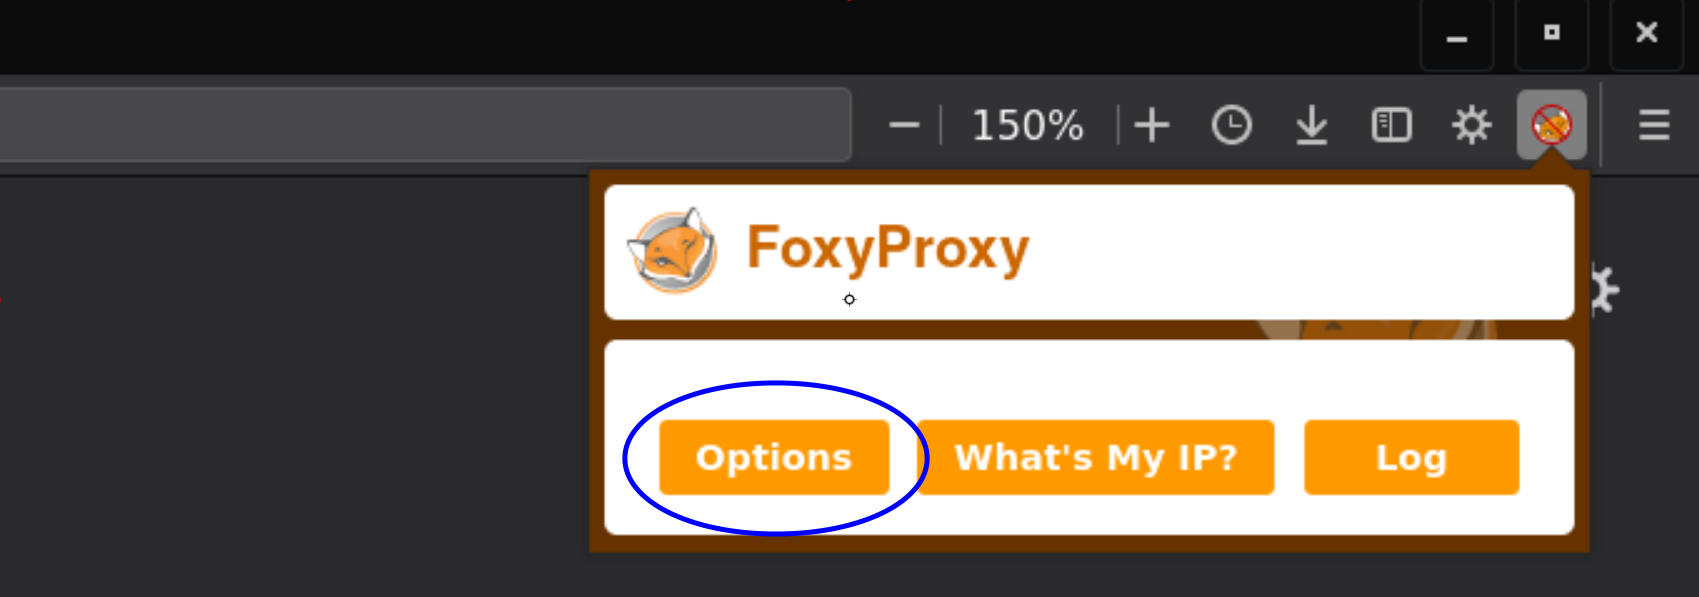 foxy_proxy1.png